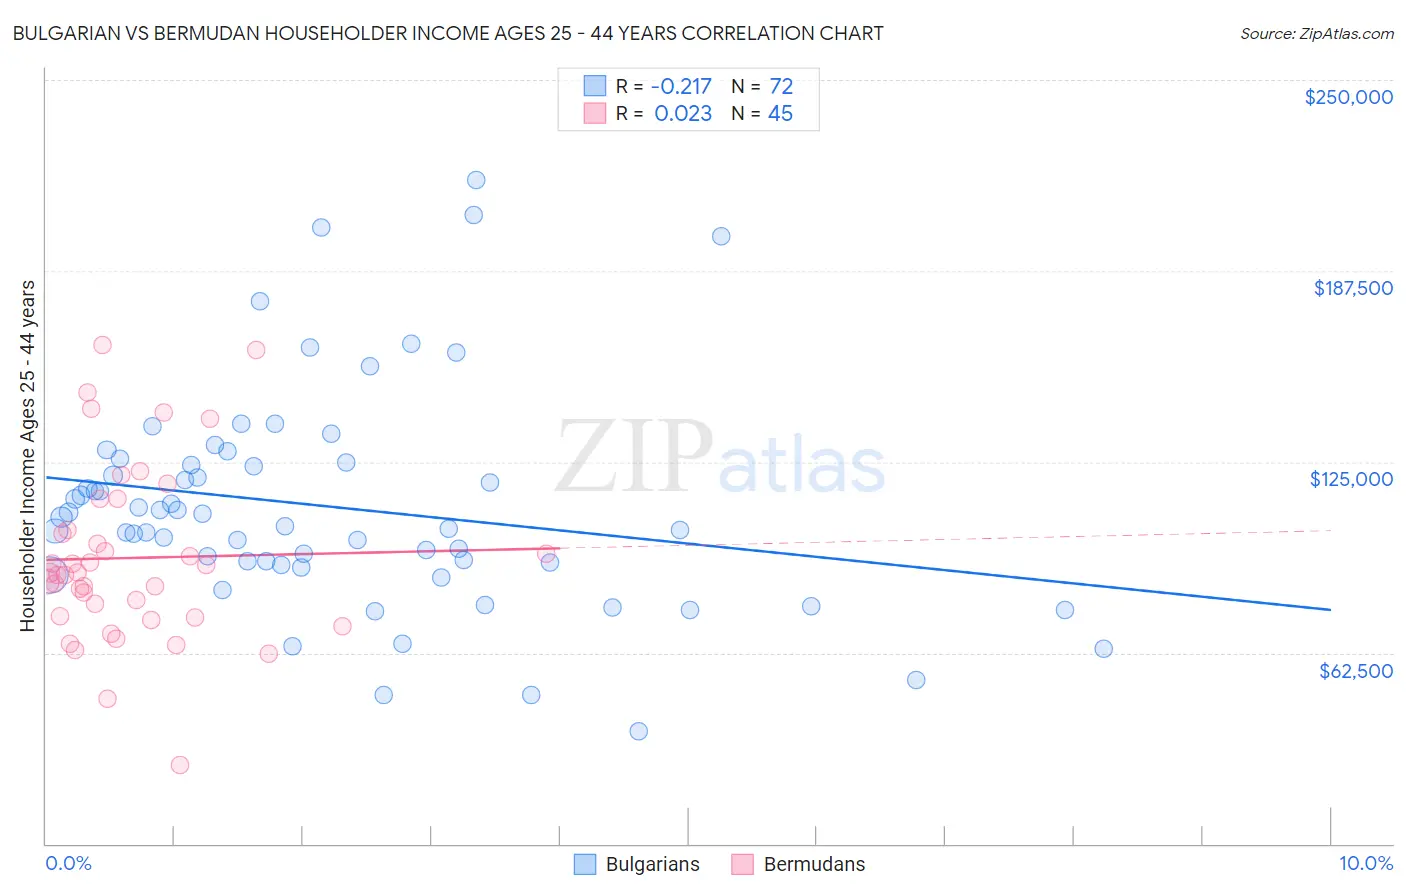 Bulgarian vs Bermudan Householder Income Ages 25 - 44 years